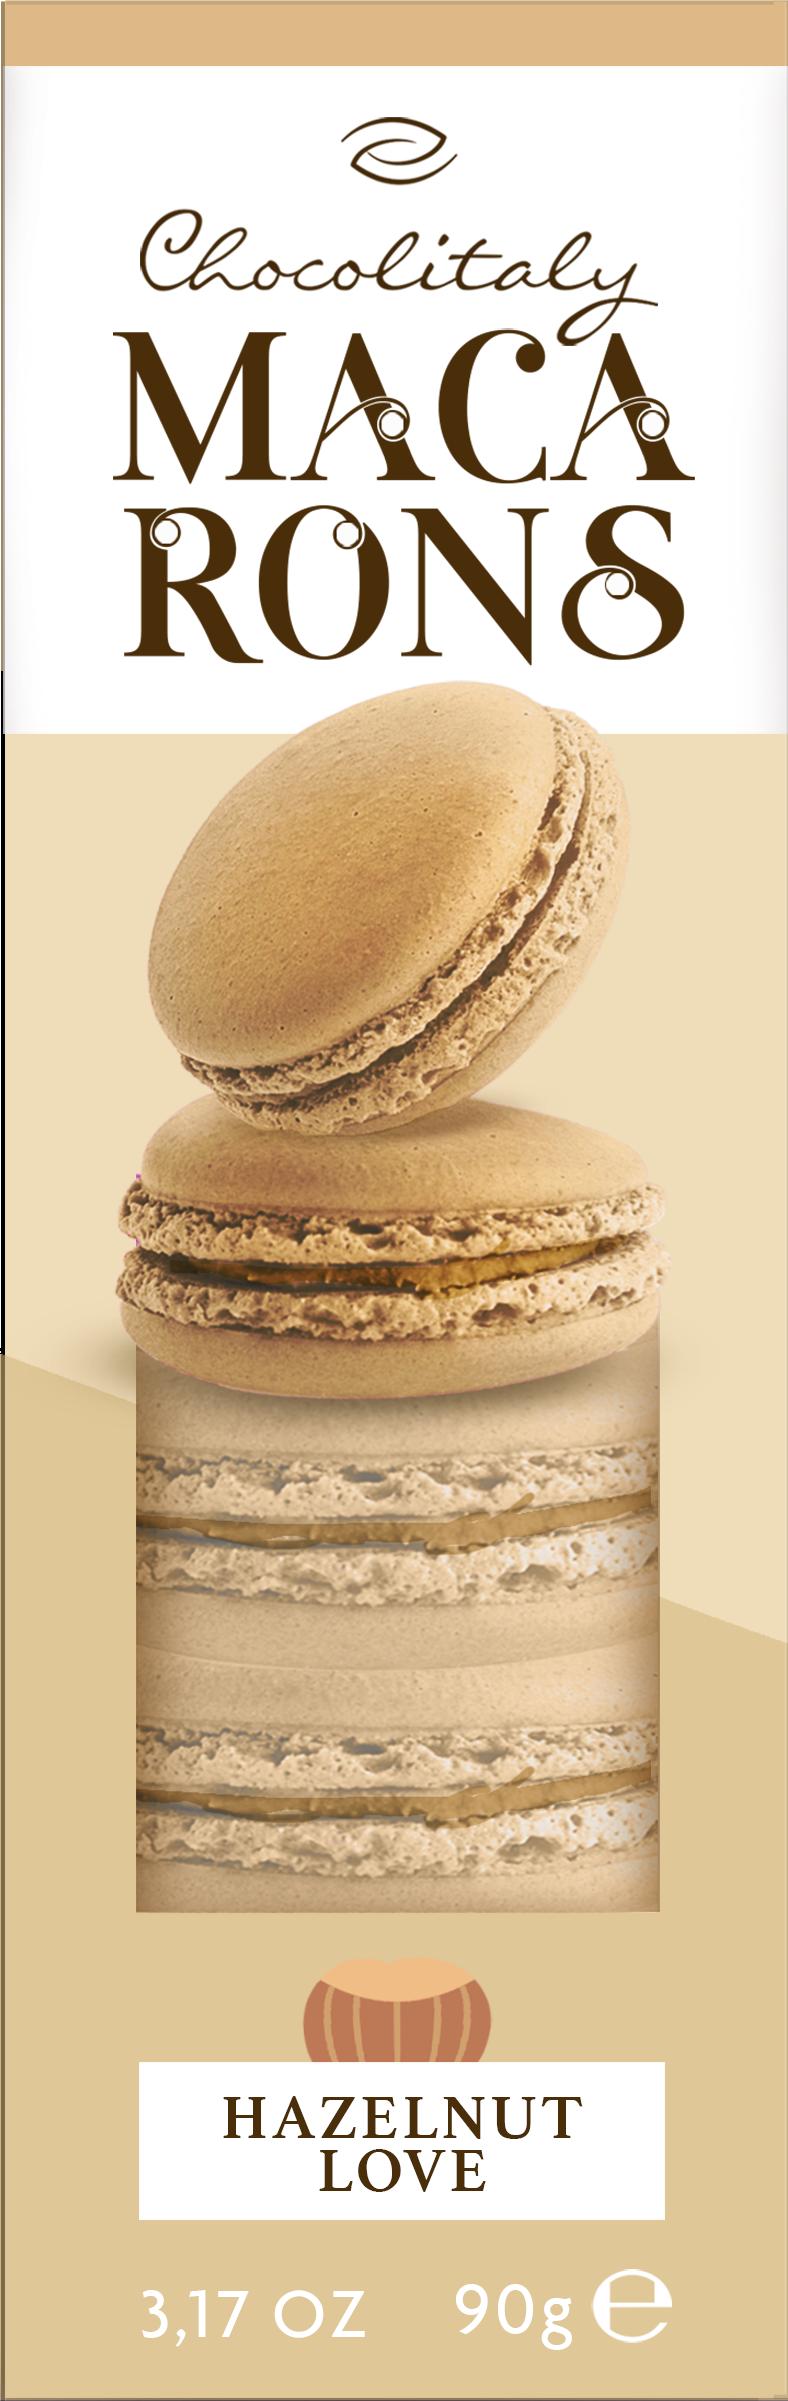 Slika za Macarons od lešnika Chocolitaly 90g